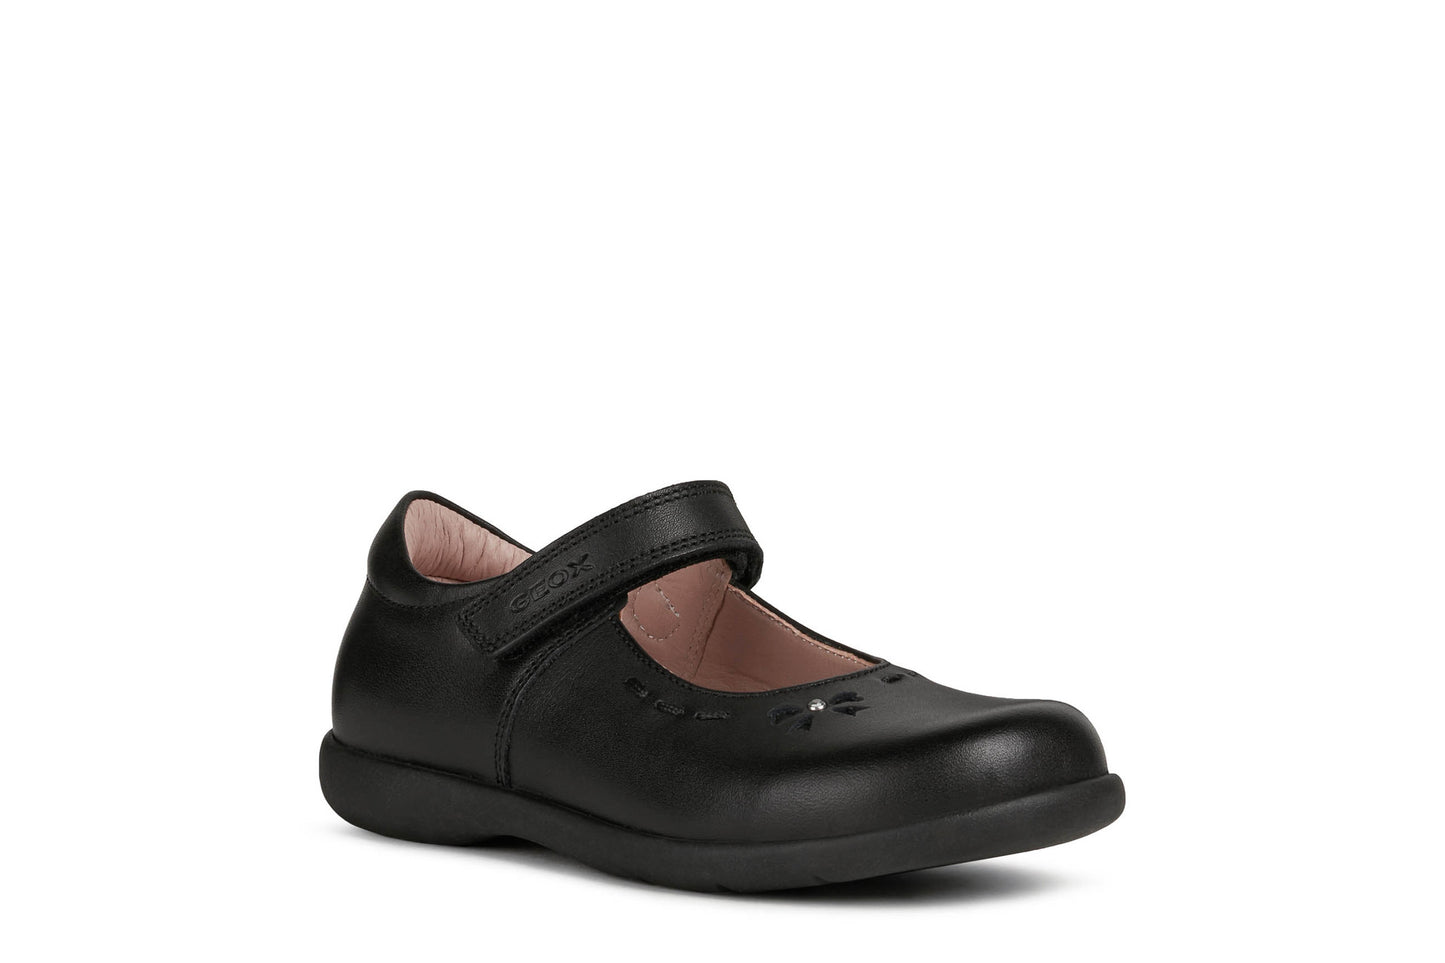 Naimara Black Leather Mary Jane Style Girl's School Shoe